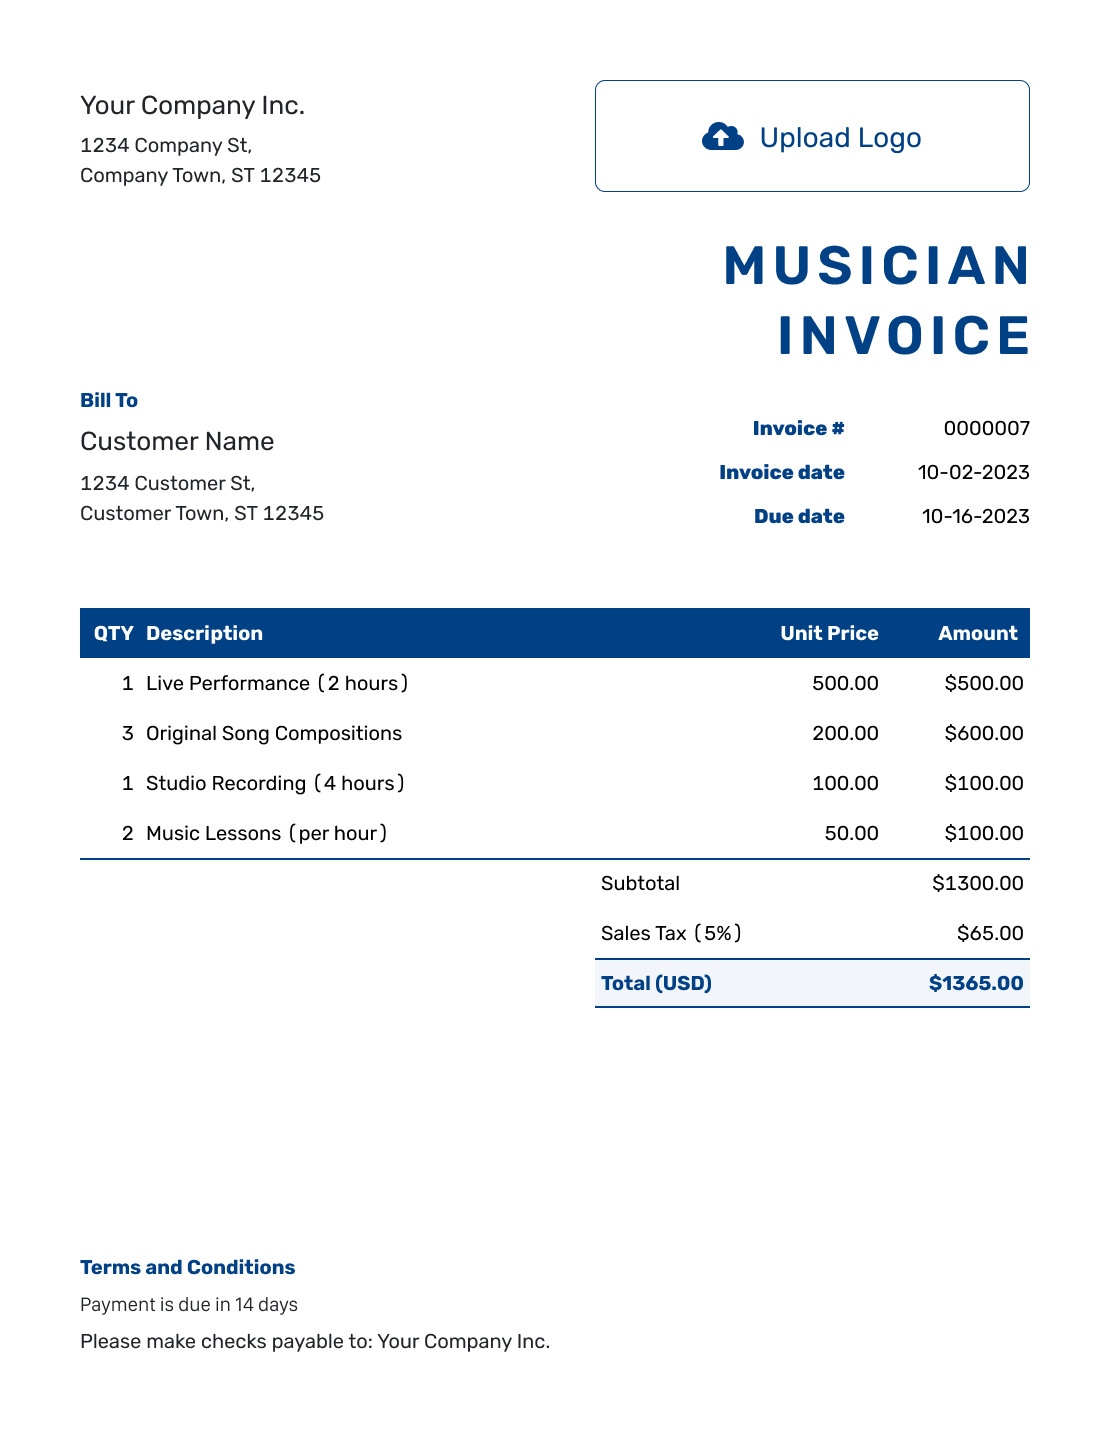 Sample Musician Invoice Template